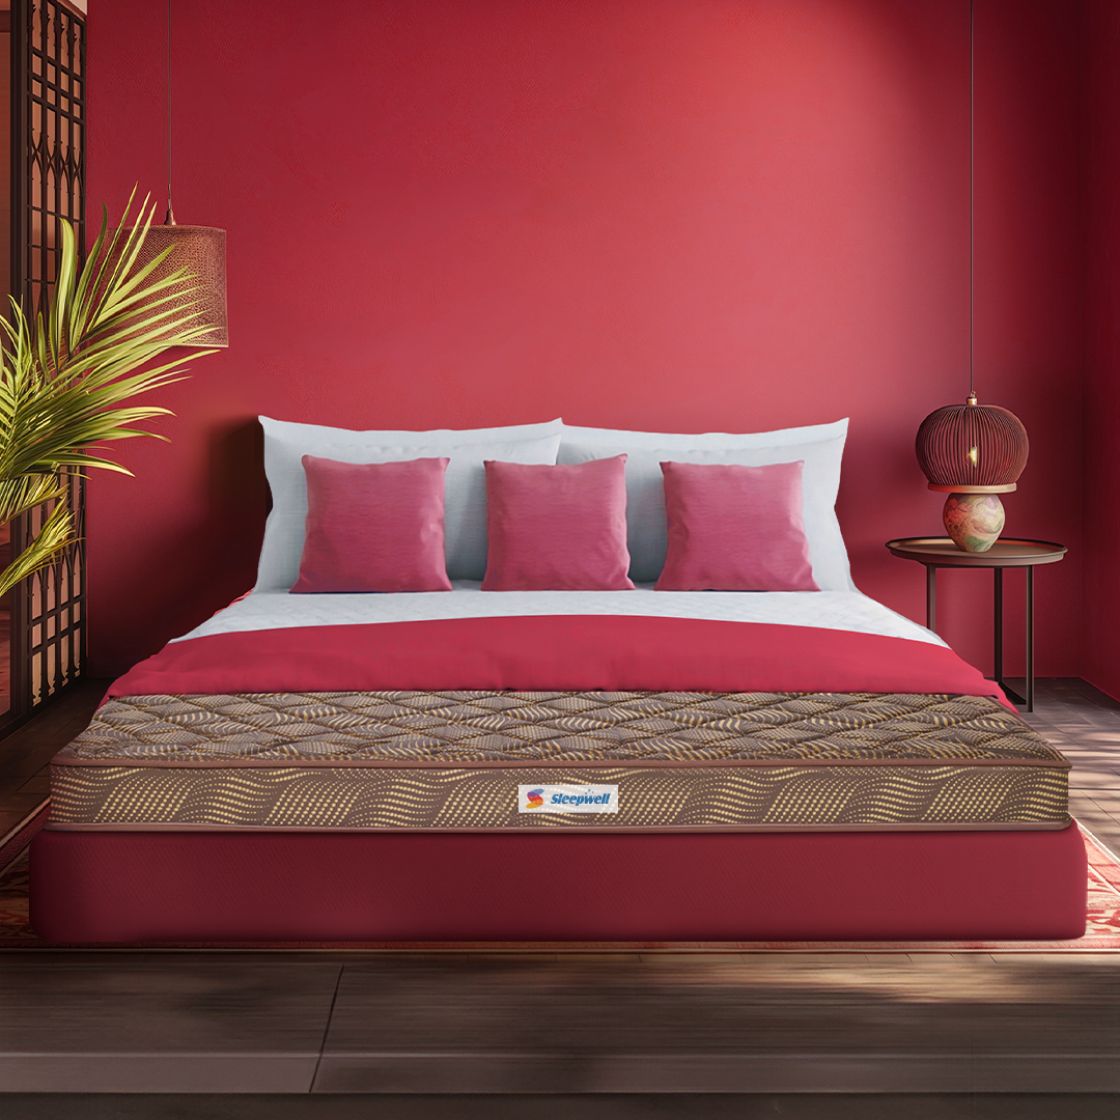 Sleepwell  Champ-Superior PU Foam | 4-inch King Bed Size | Medium Firm | Anti Sag Tech Mattress (Brown, 75x48x4)